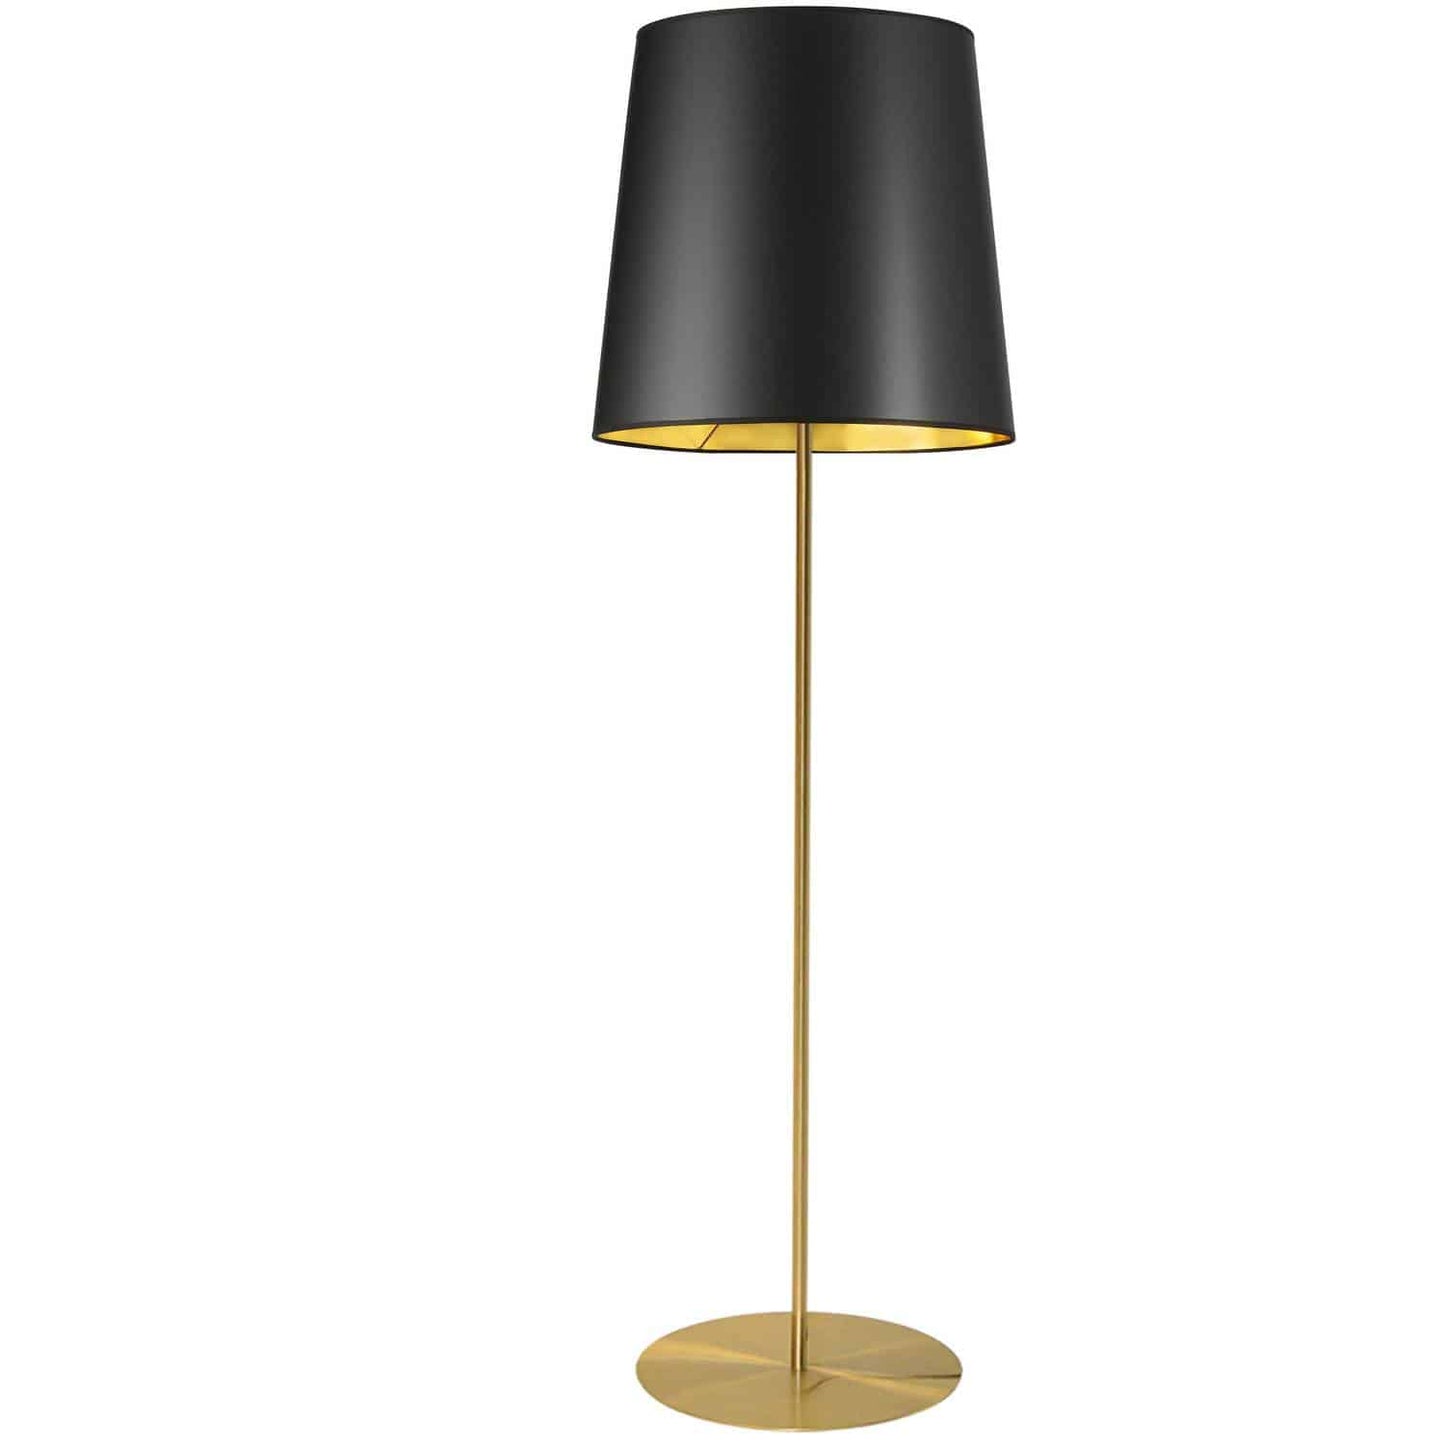 Dainolite MM681F-AGB-698 1 Light Aged Brass Floor Lamp w/ Black/Gold Drum Shade